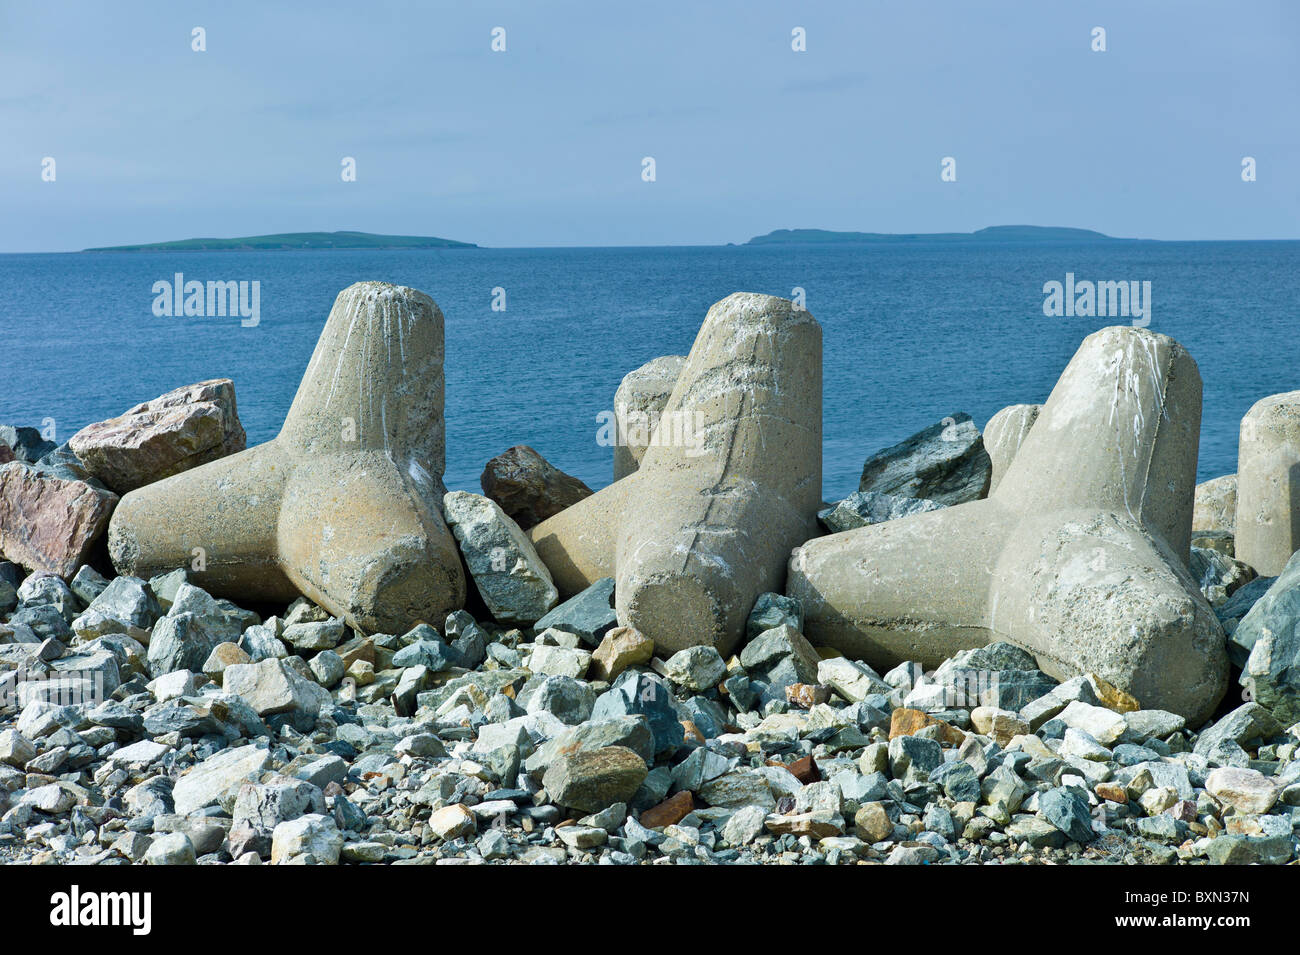 Saltee Islands in Irish Sea with sea defences in foreground, Kilmore, County Wexford, Ireland Stock Photo